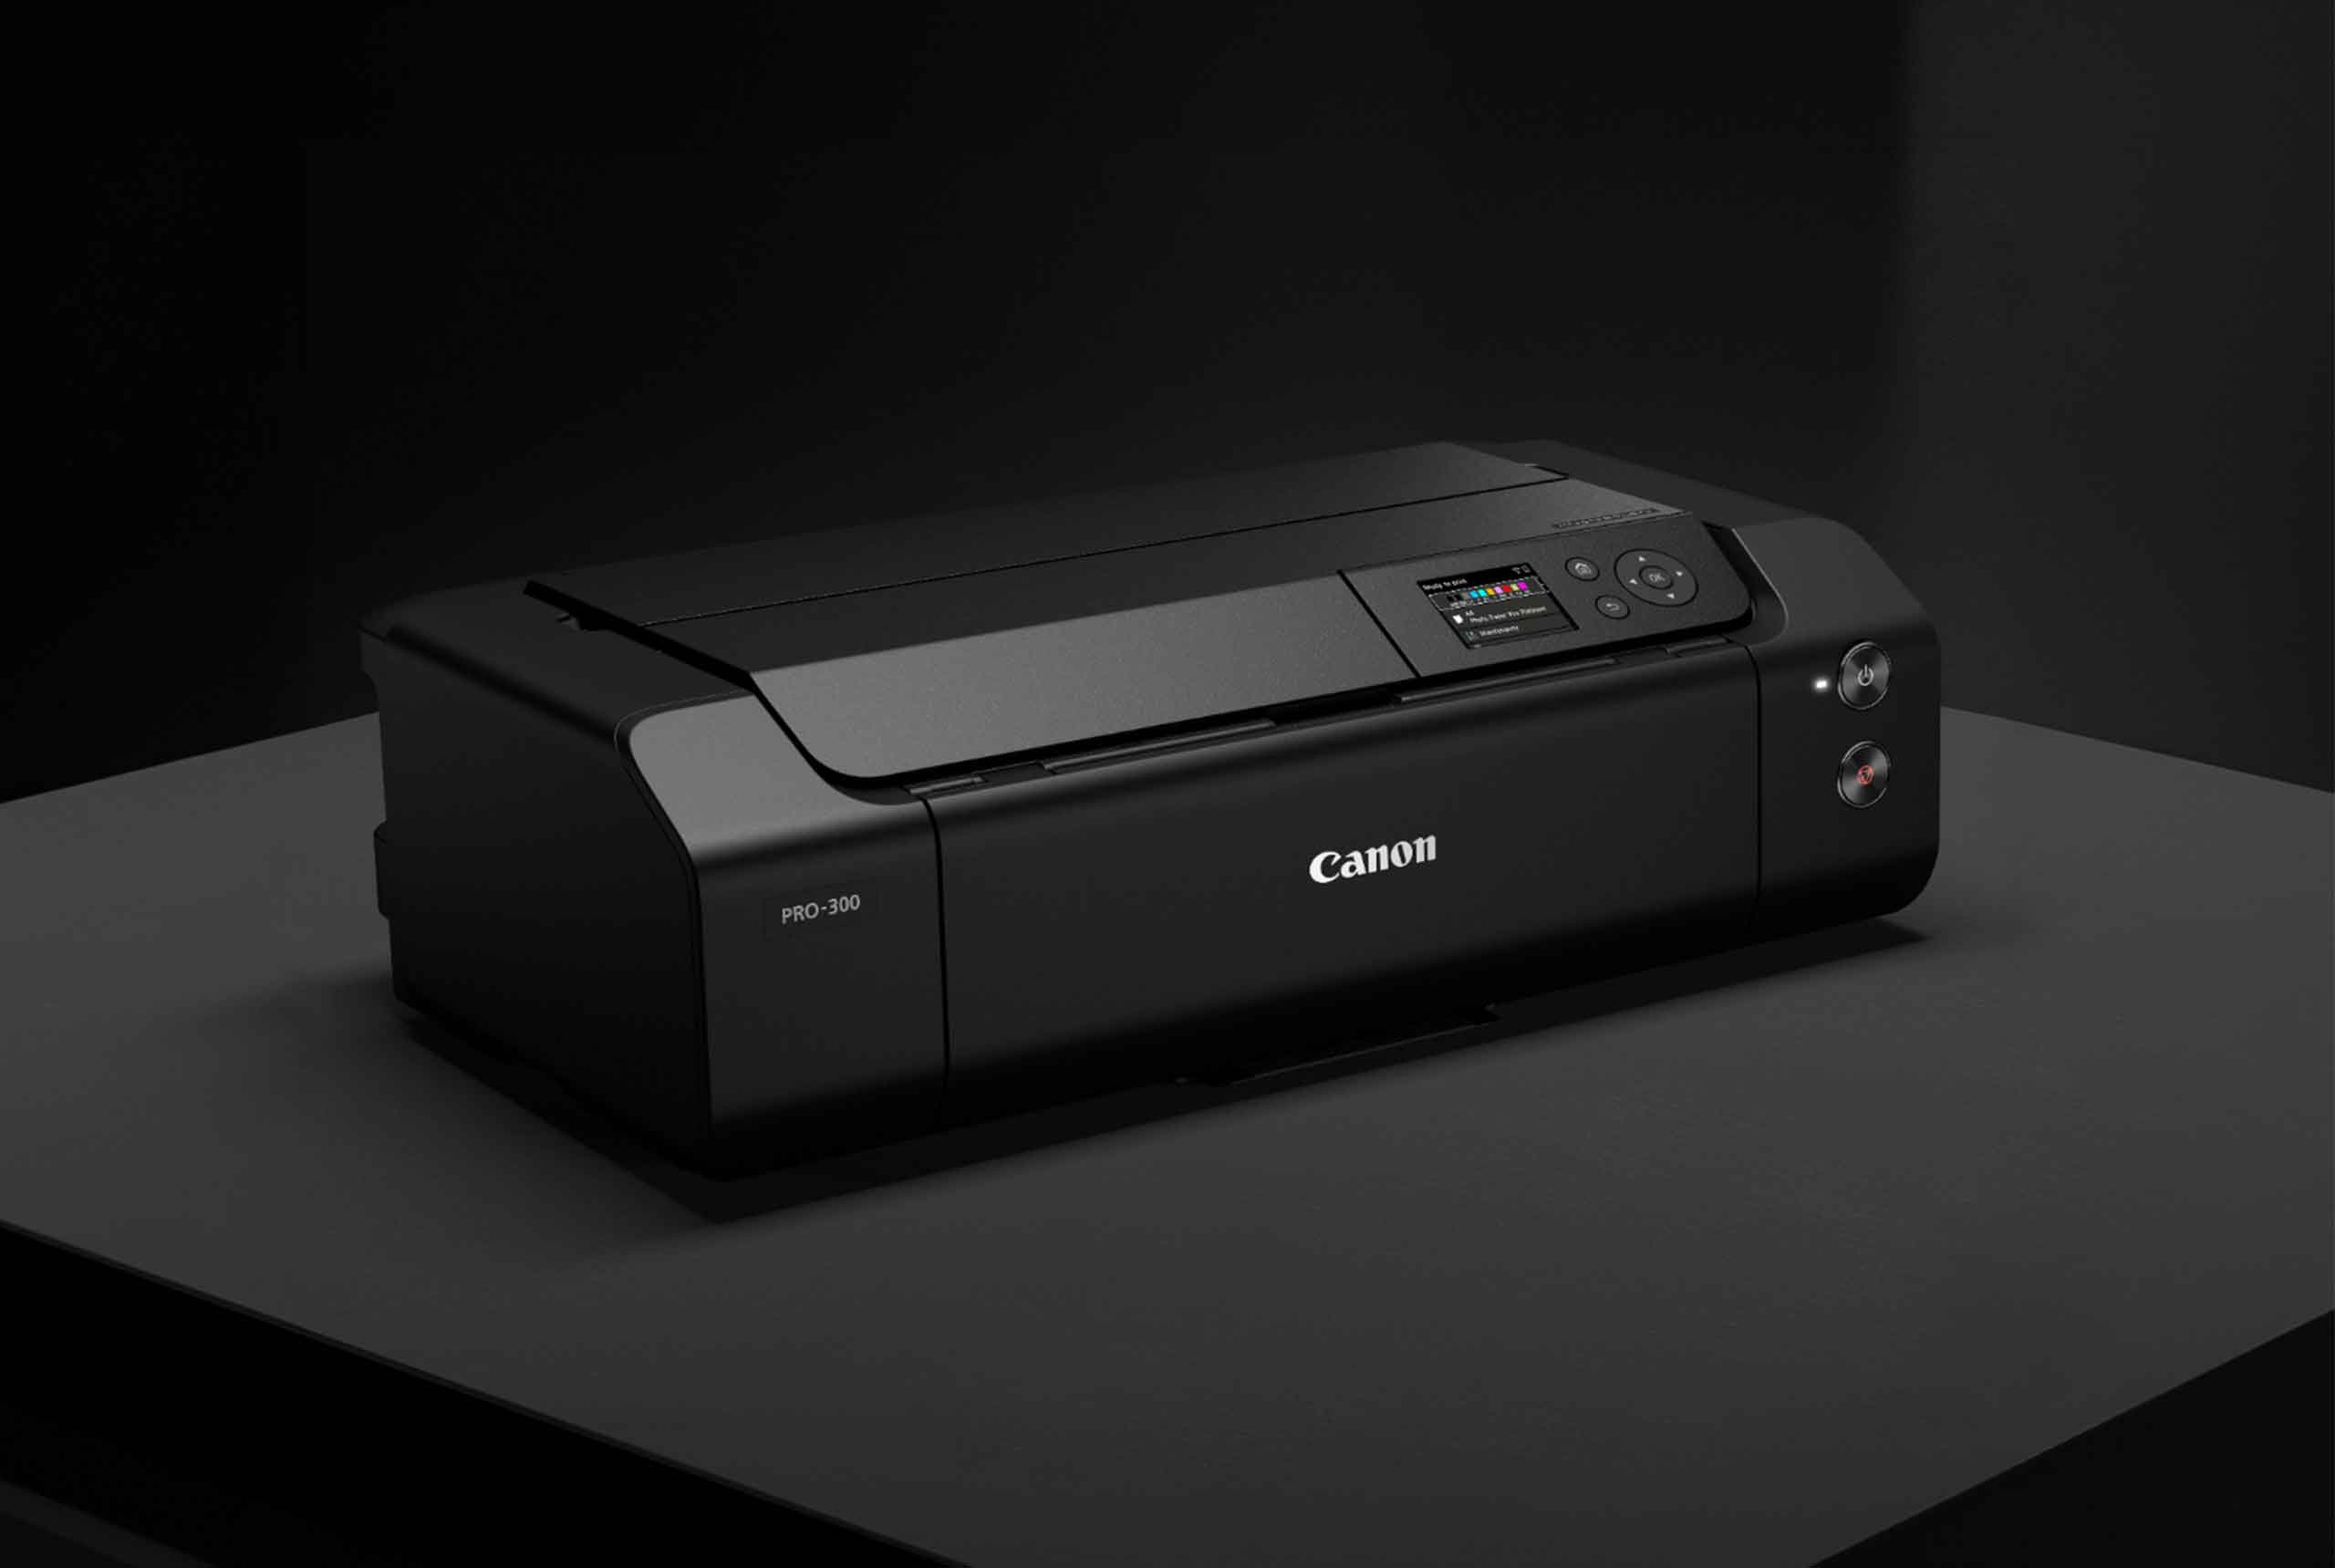 Canon imageprograf pro-300 inkjet printer